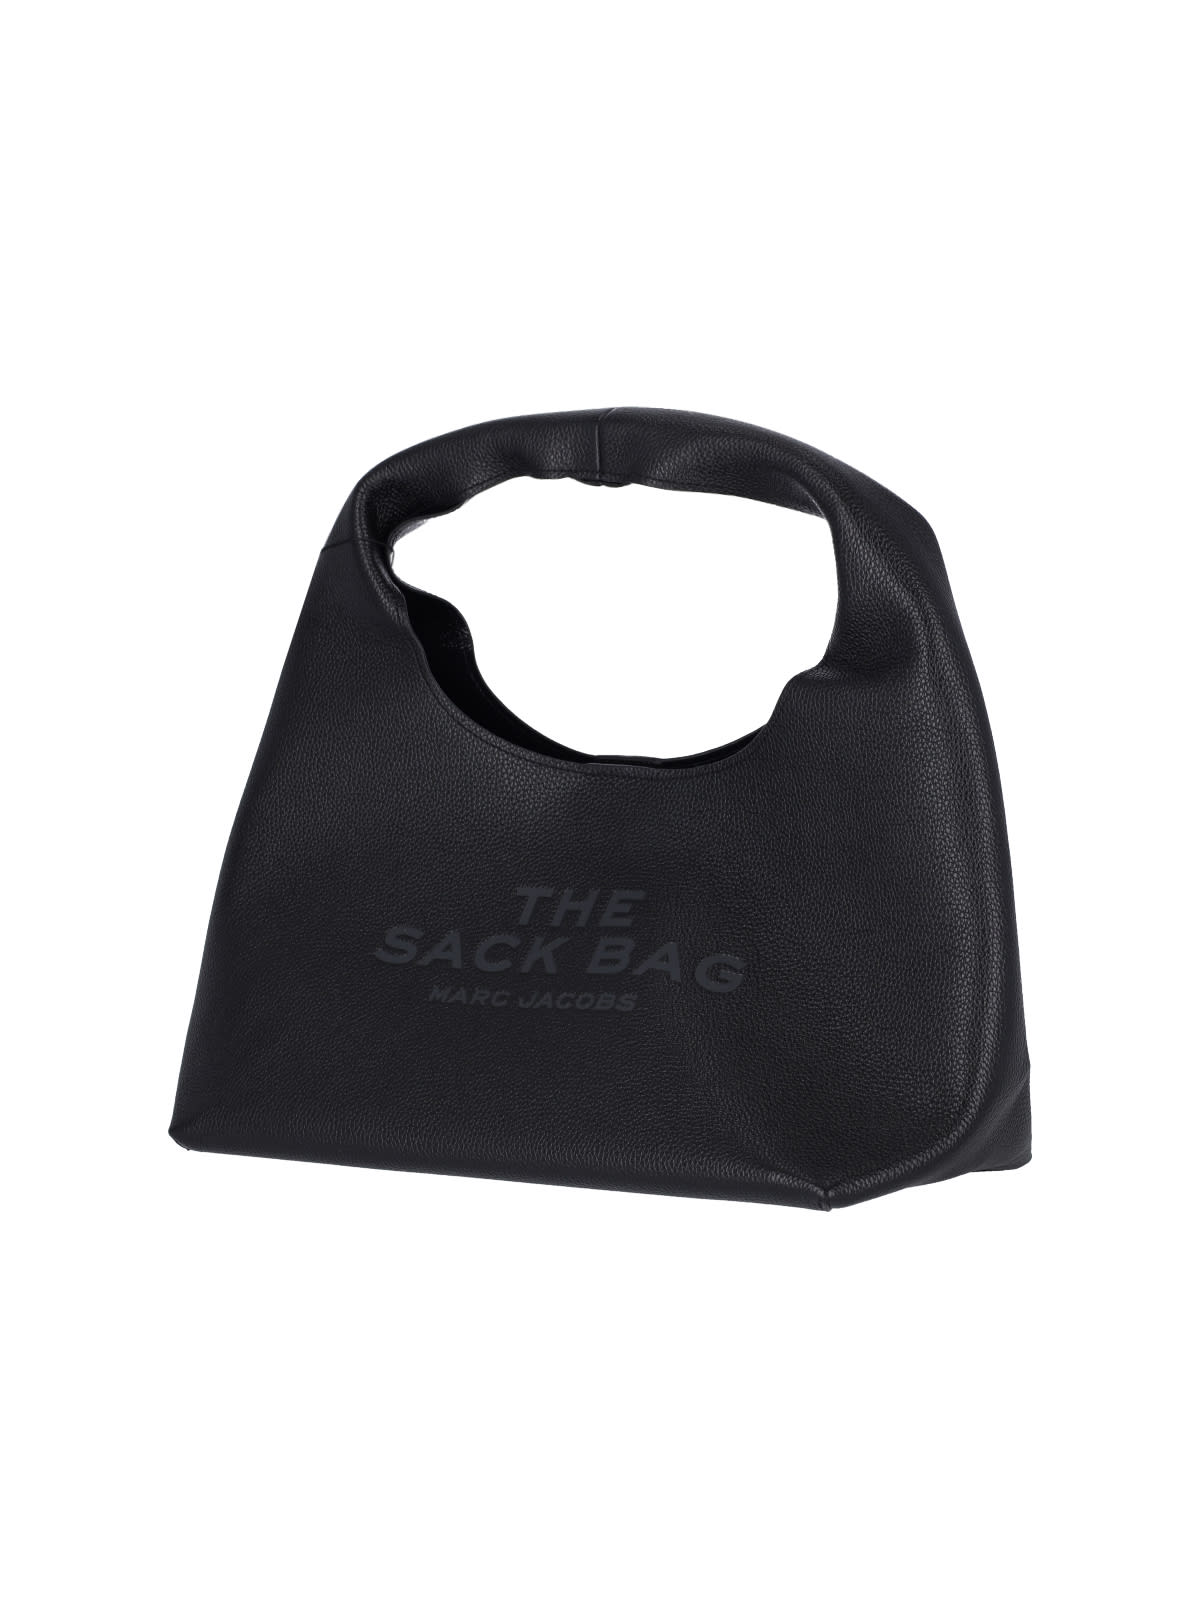 Shop Marc Jacobs The Sac Bag